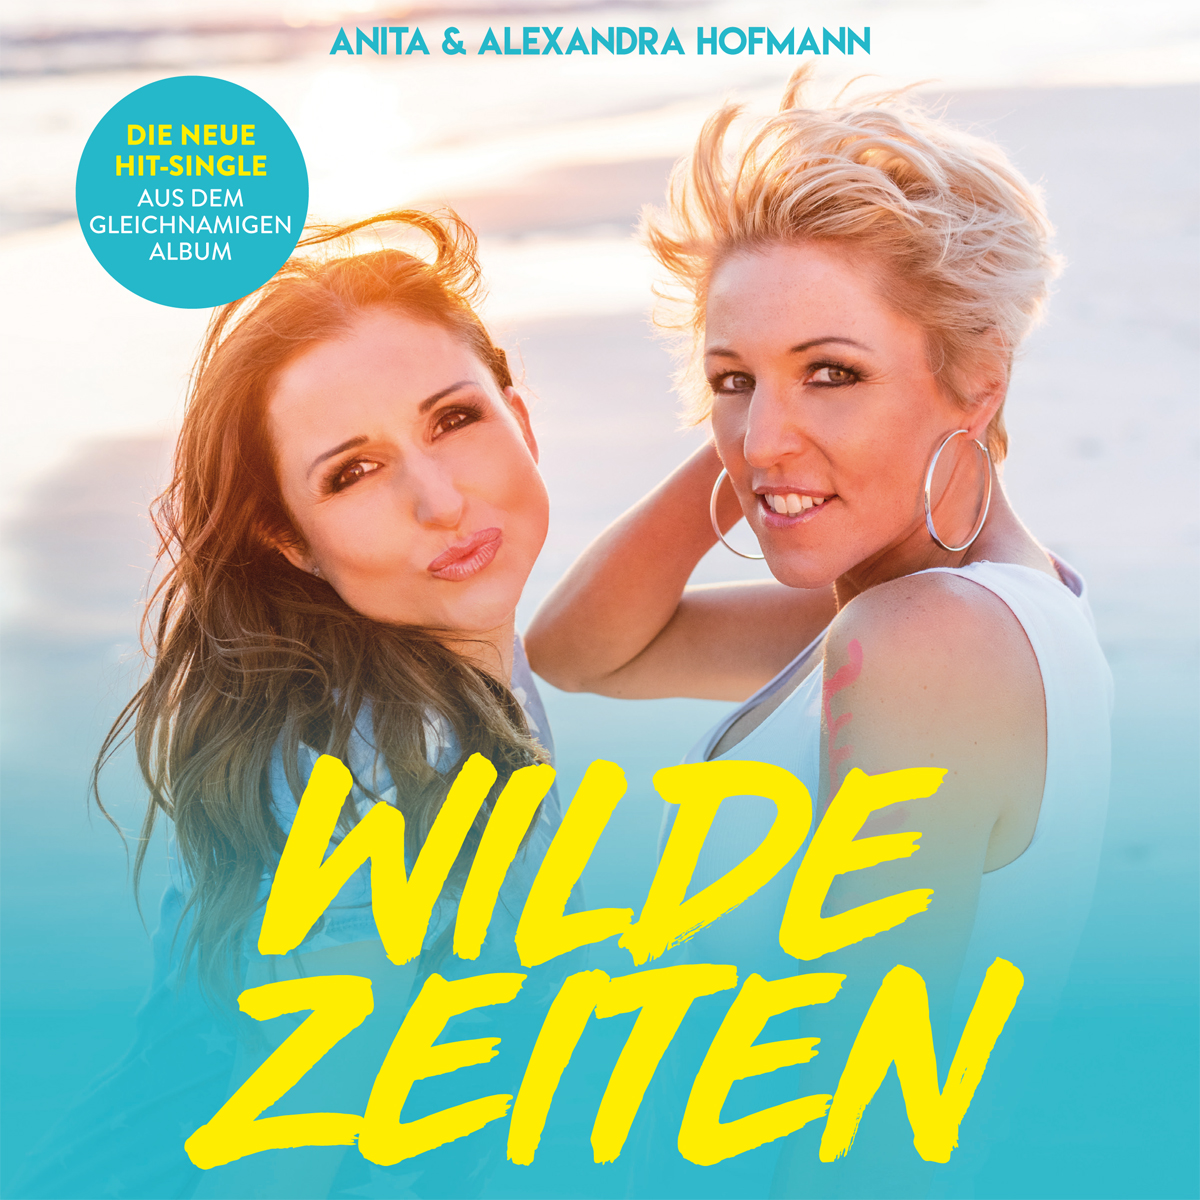 Anita & Alexandra Hofmann - Wilde Zeiten (2020)